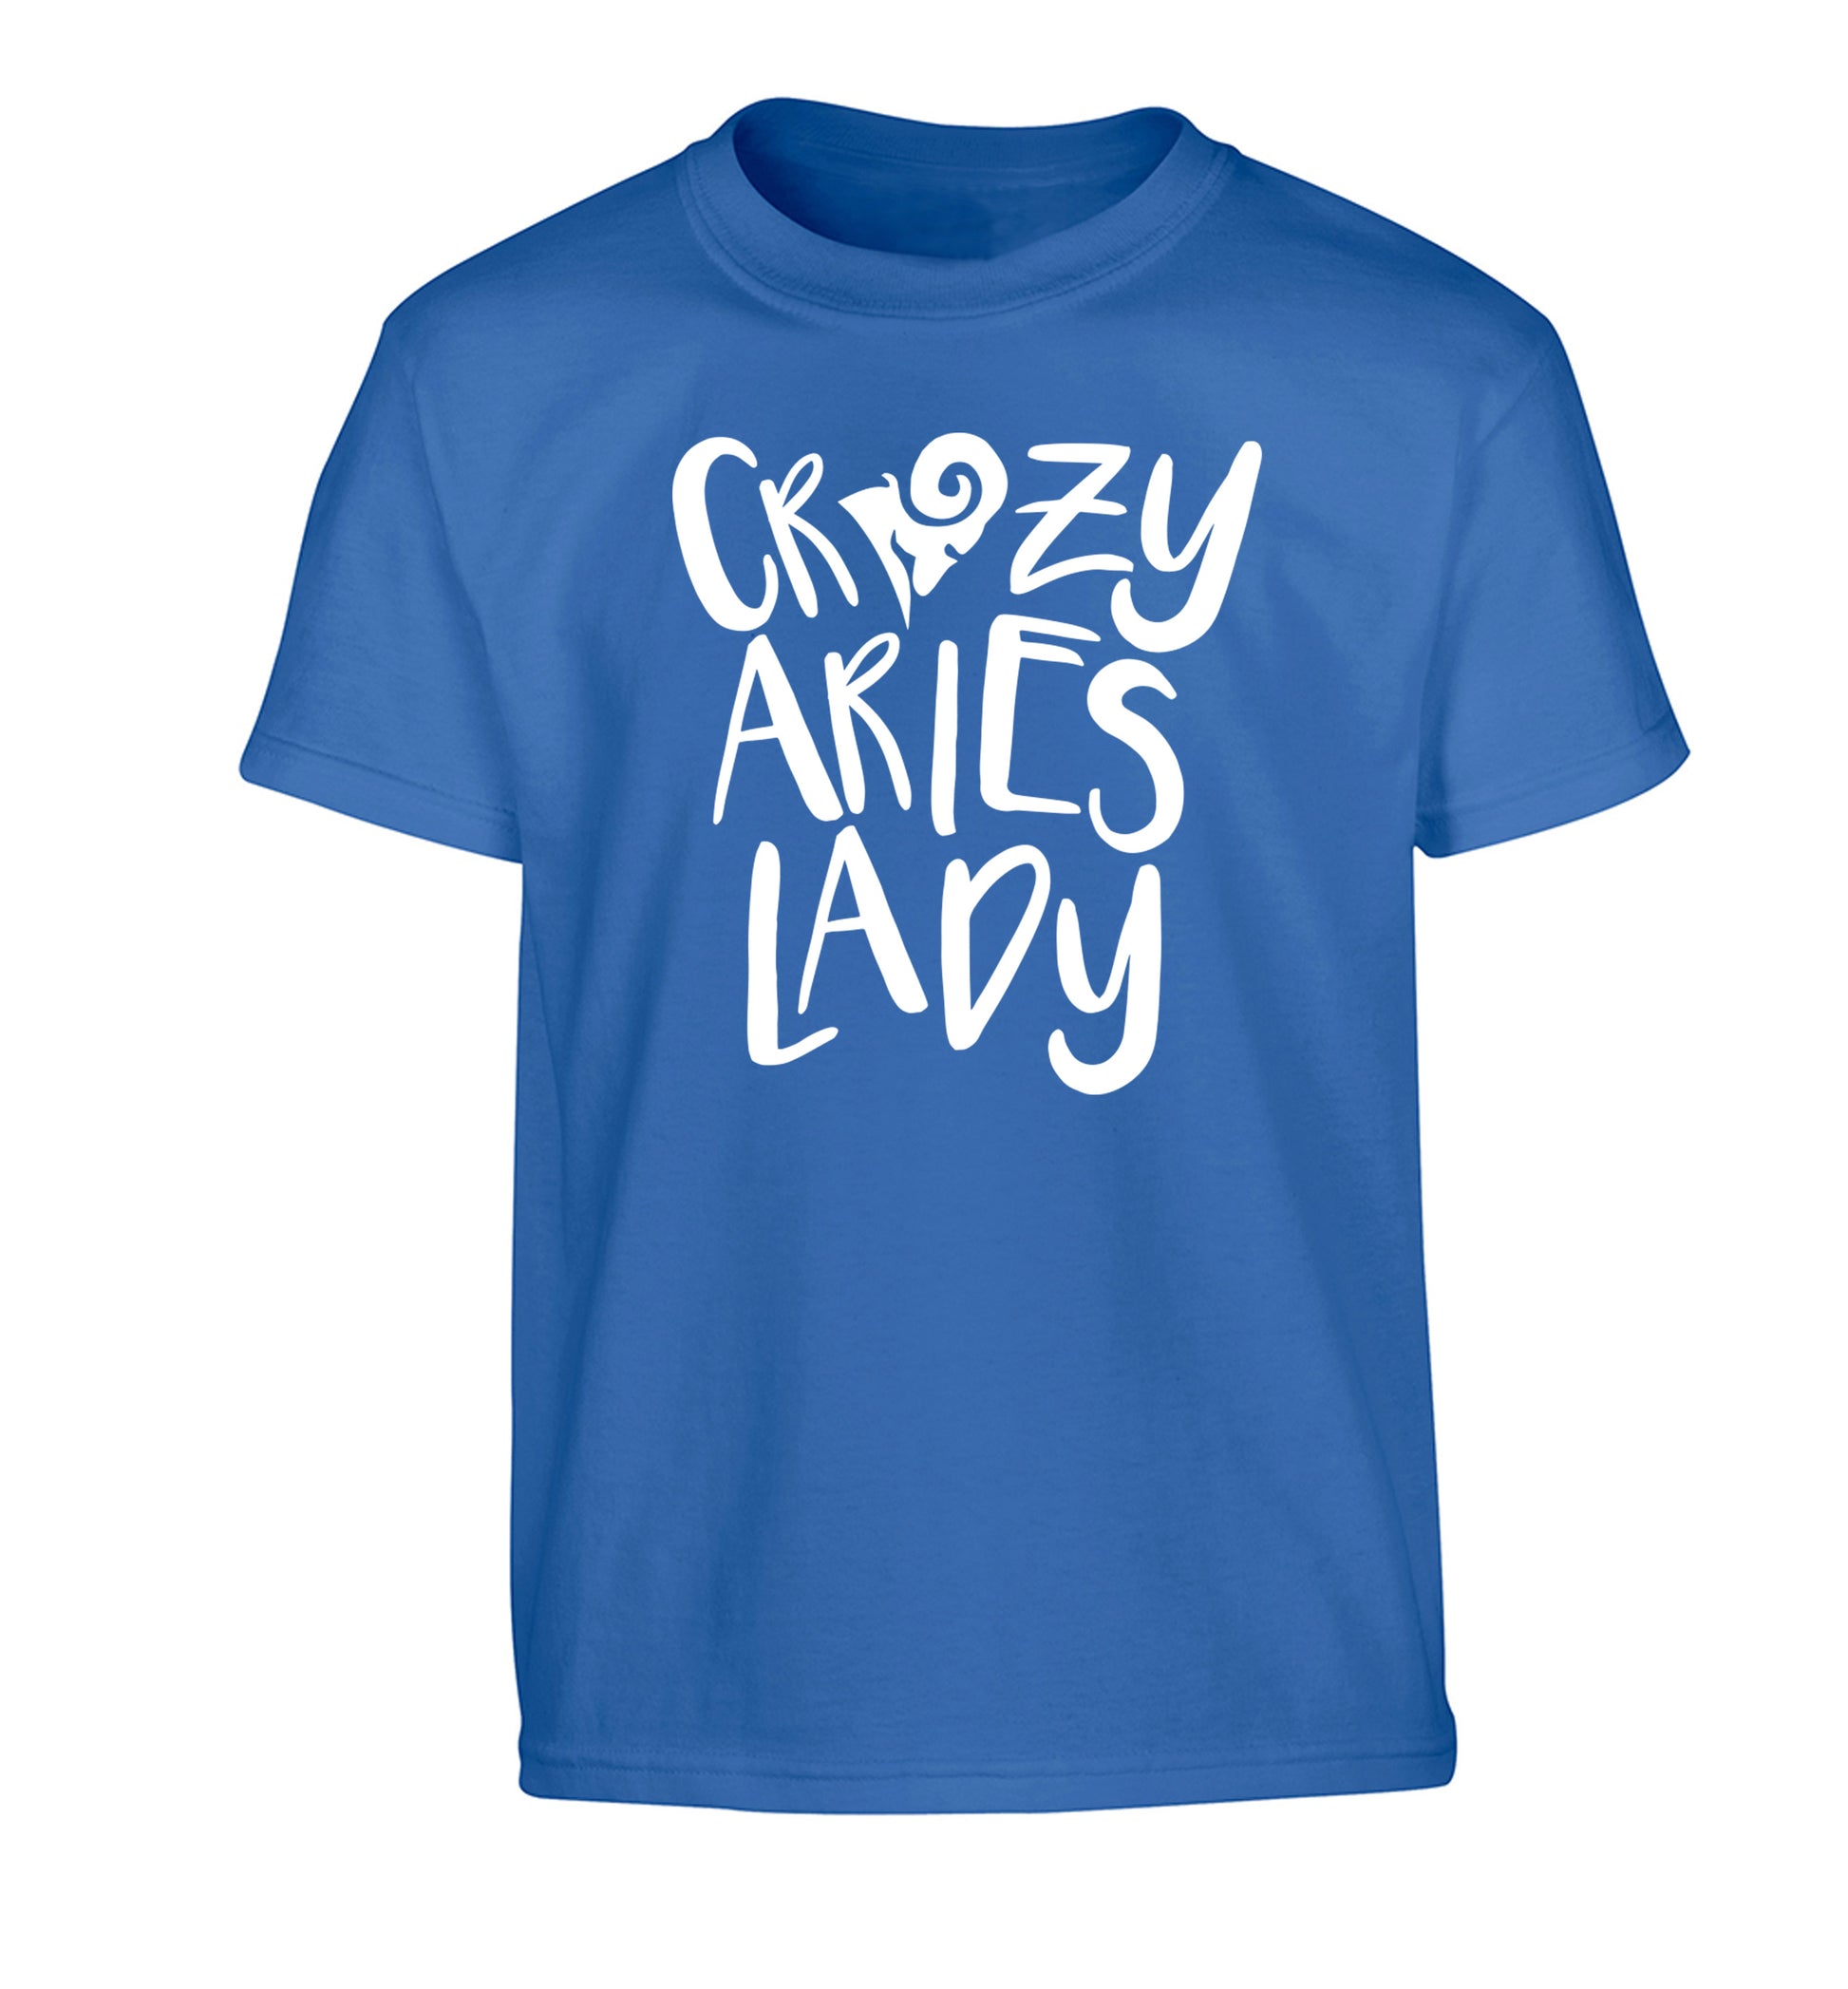 Crazy aries lady Children's blue Tshirt 12-13 Years